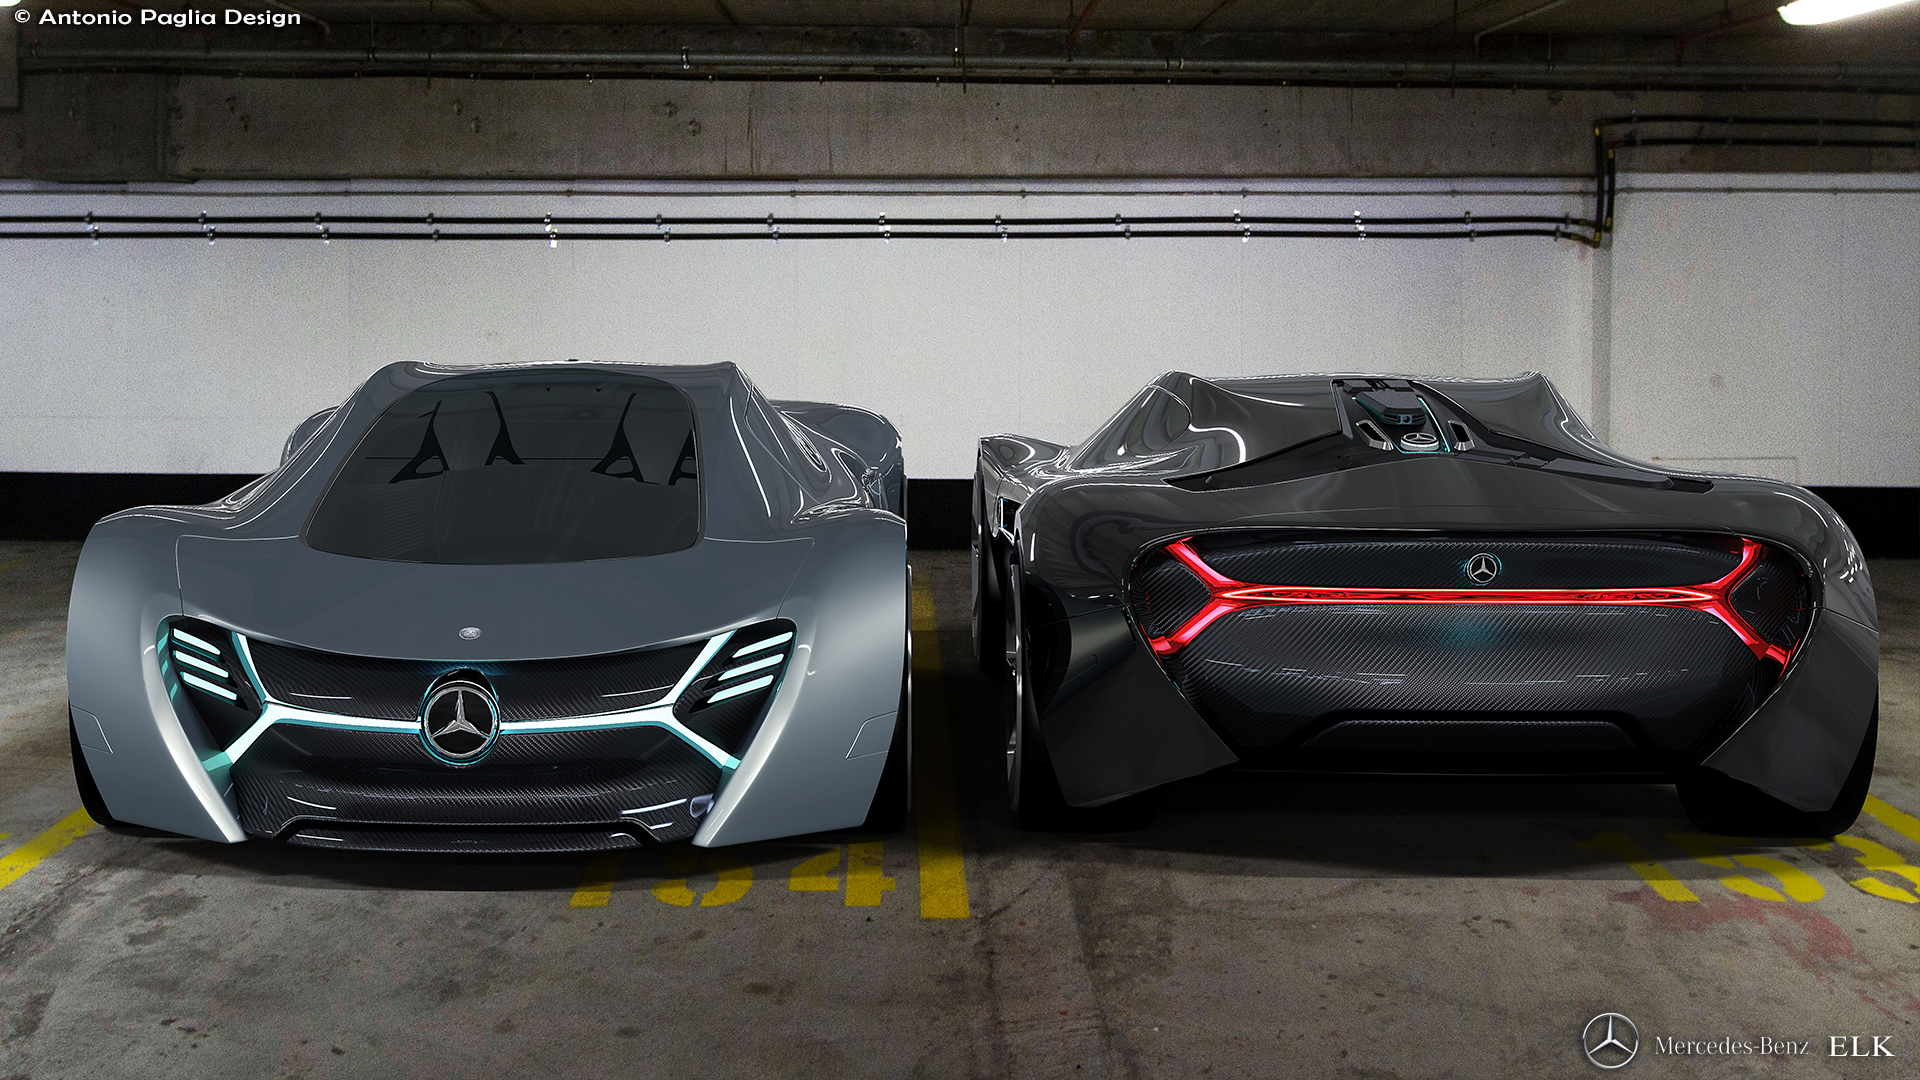 Прототип будущего. Мерседес прототип 2022. Мерседес Елк. Мерседес концепт спорткар. Mercedes электромобиль суперкар.